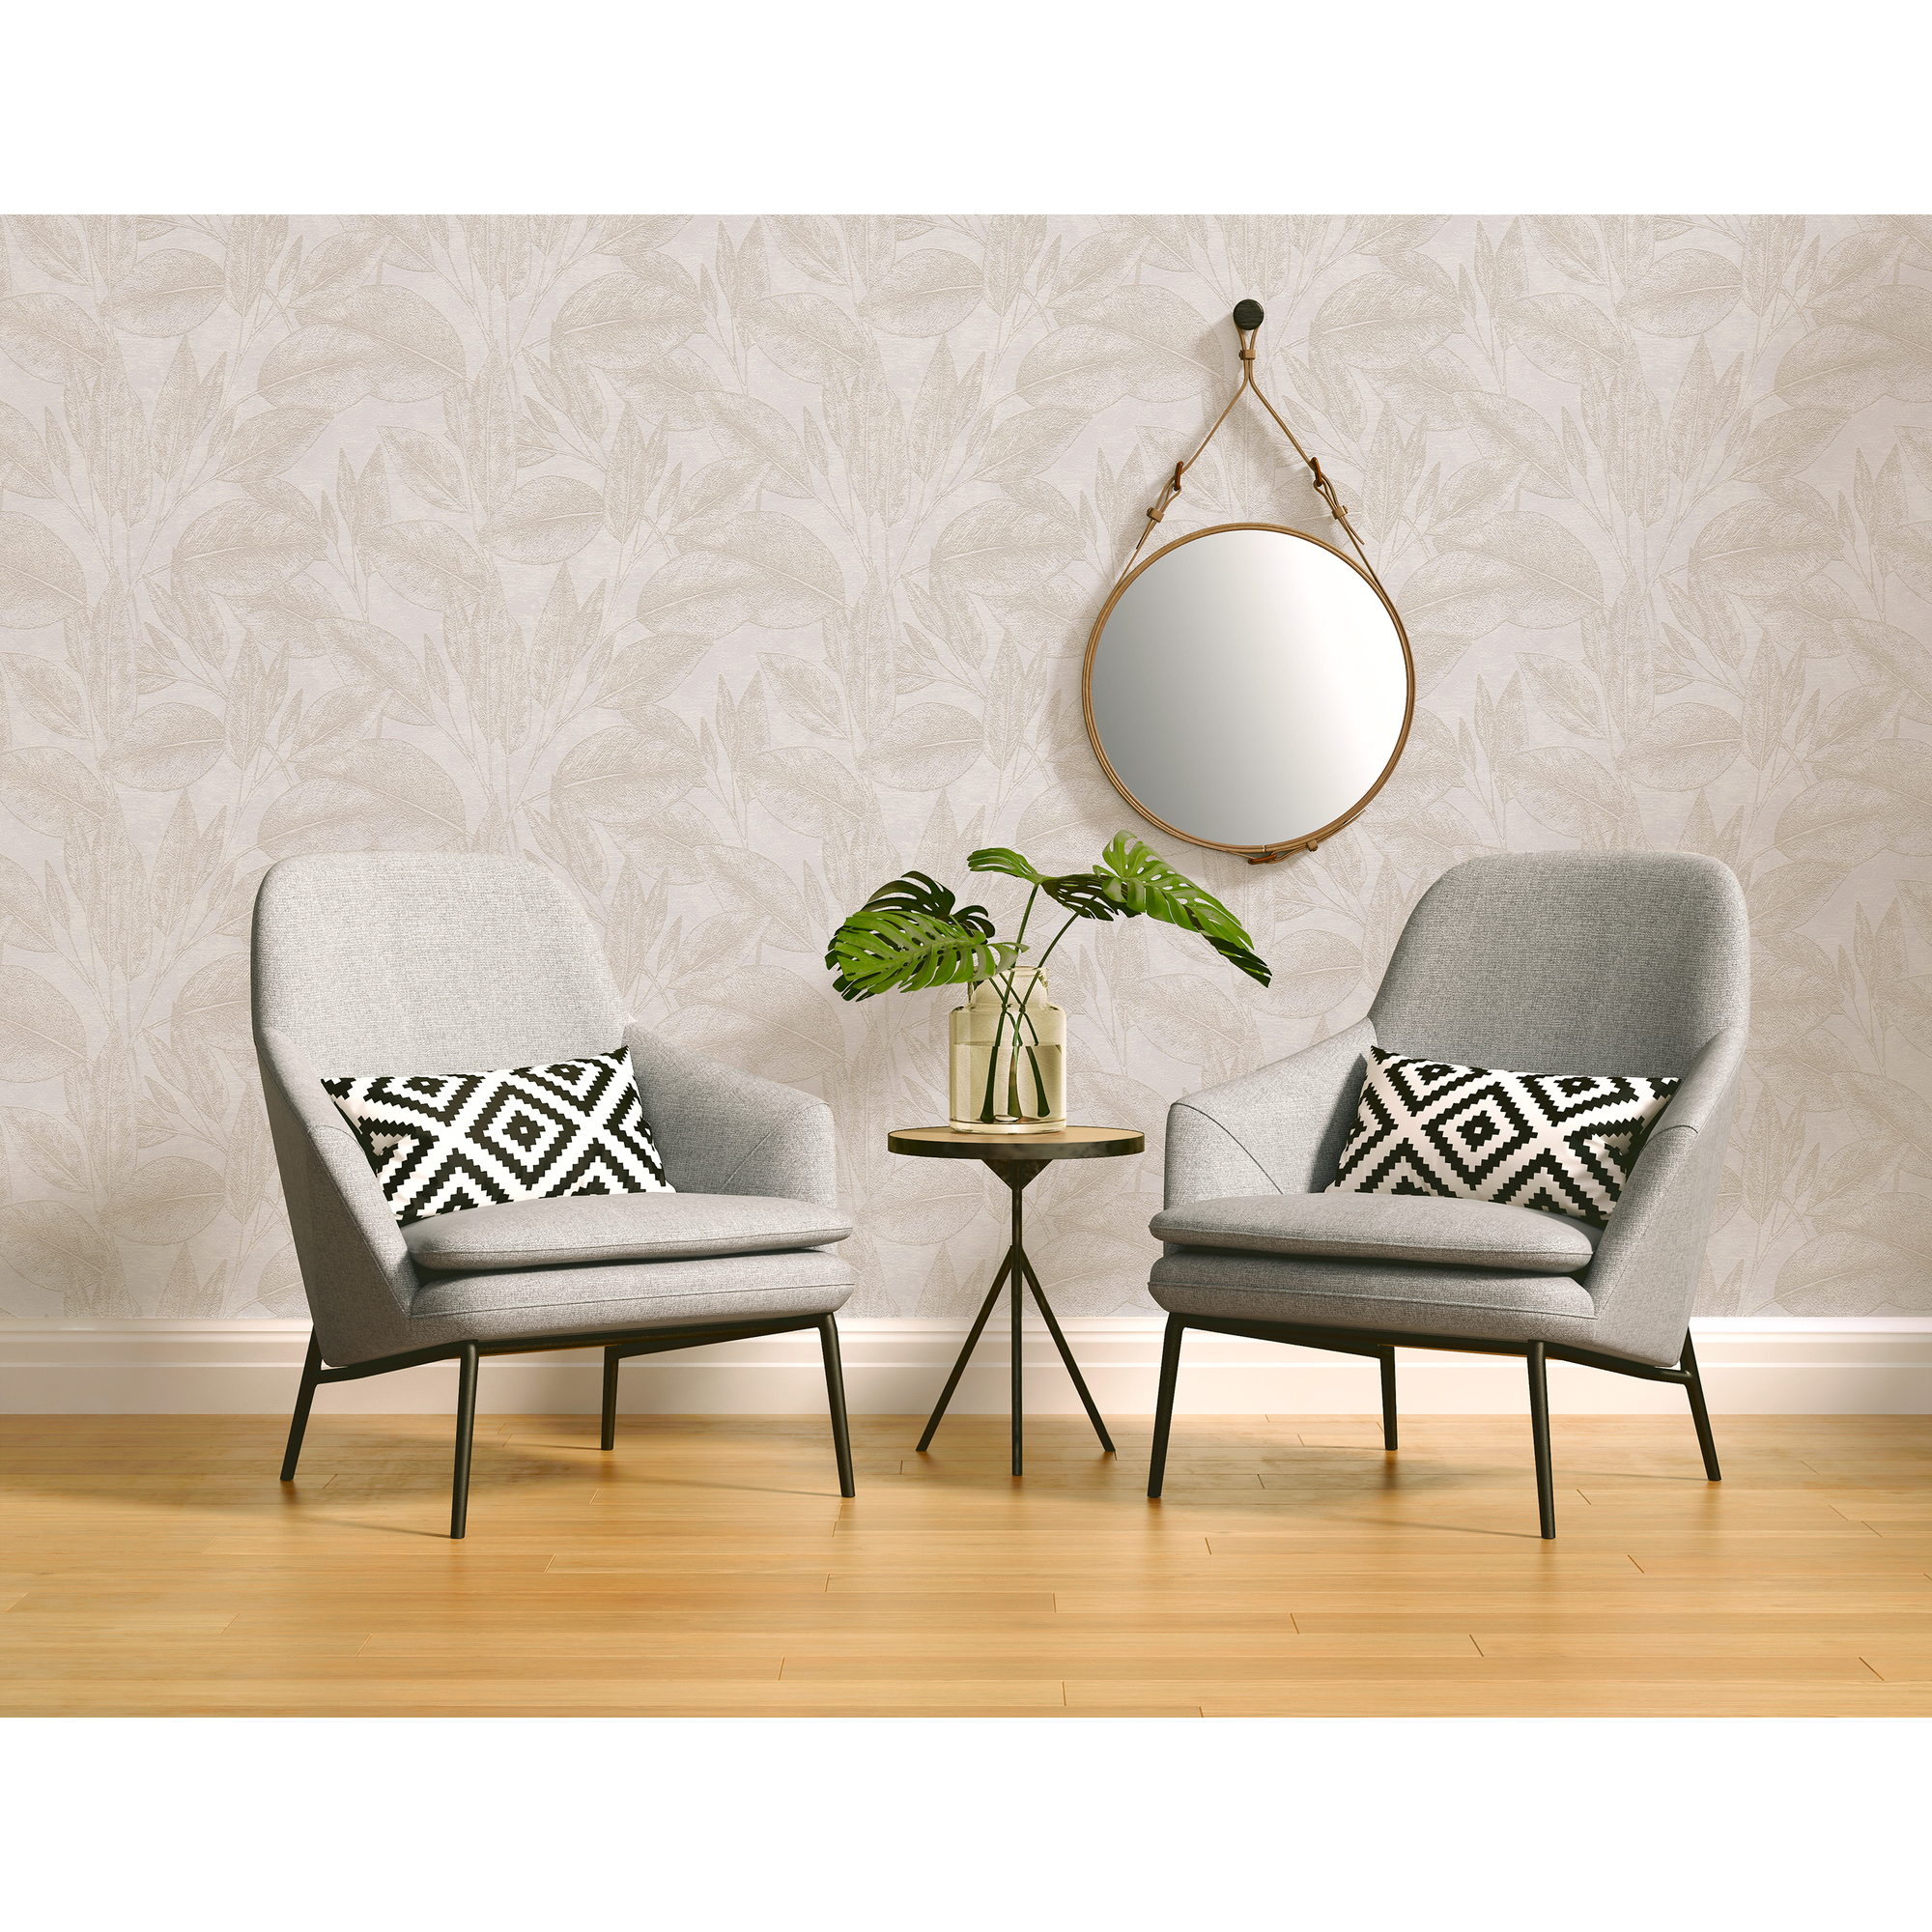 Vliestapete 'Attractive' Blätter beige 53 x 1005 cm + product picture